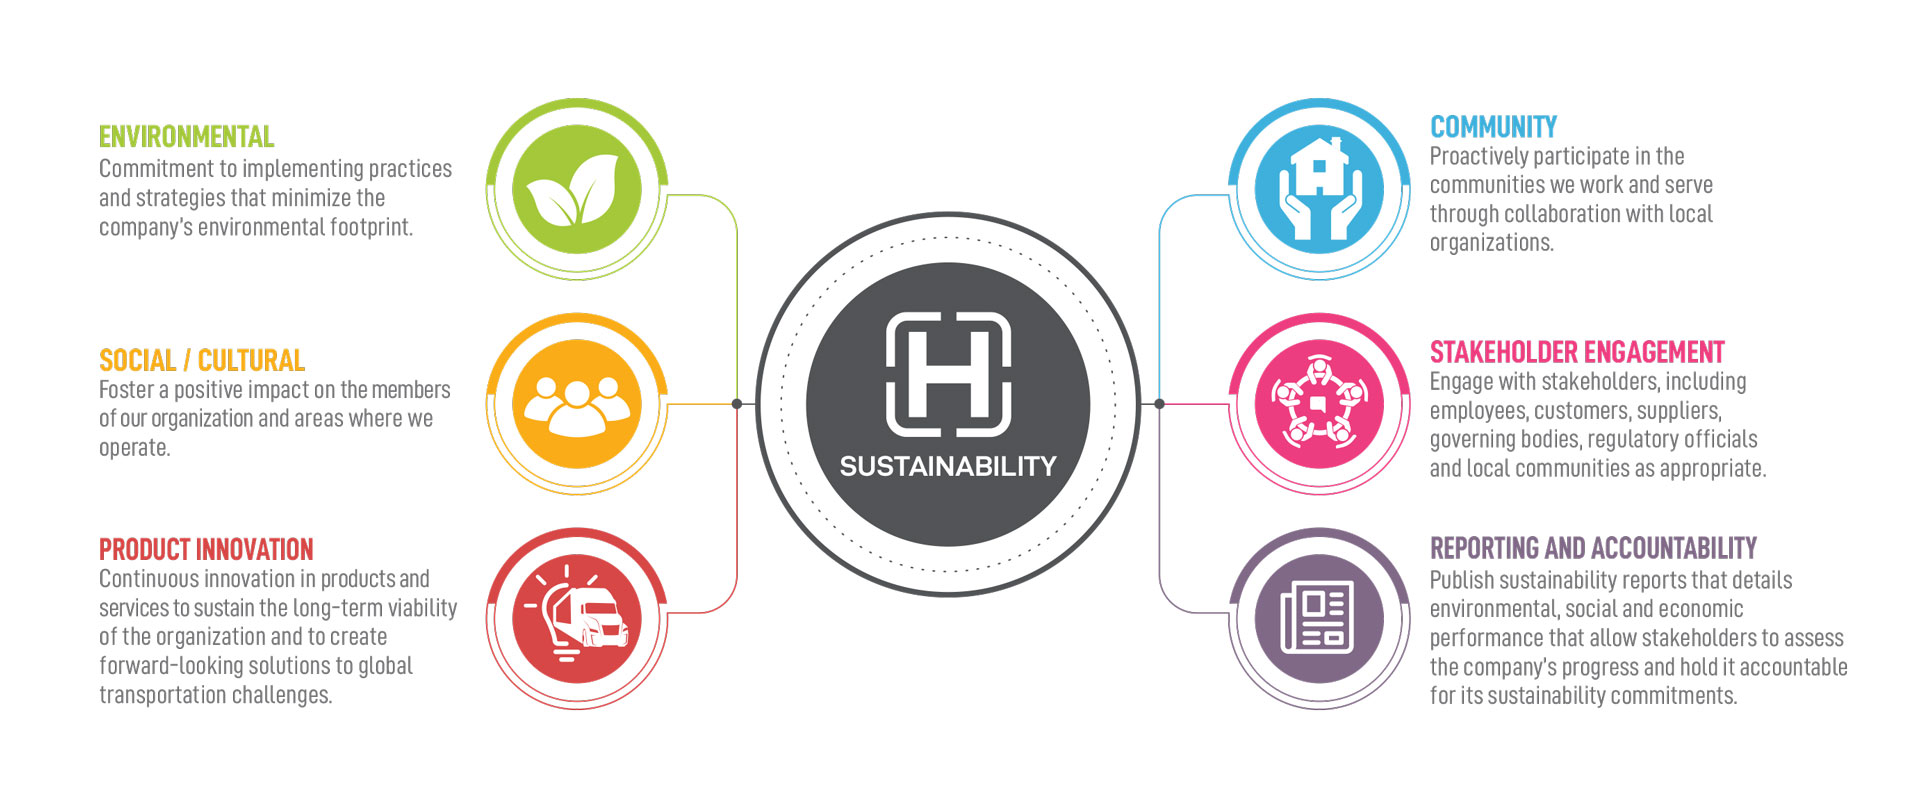 Sustainability Infographic